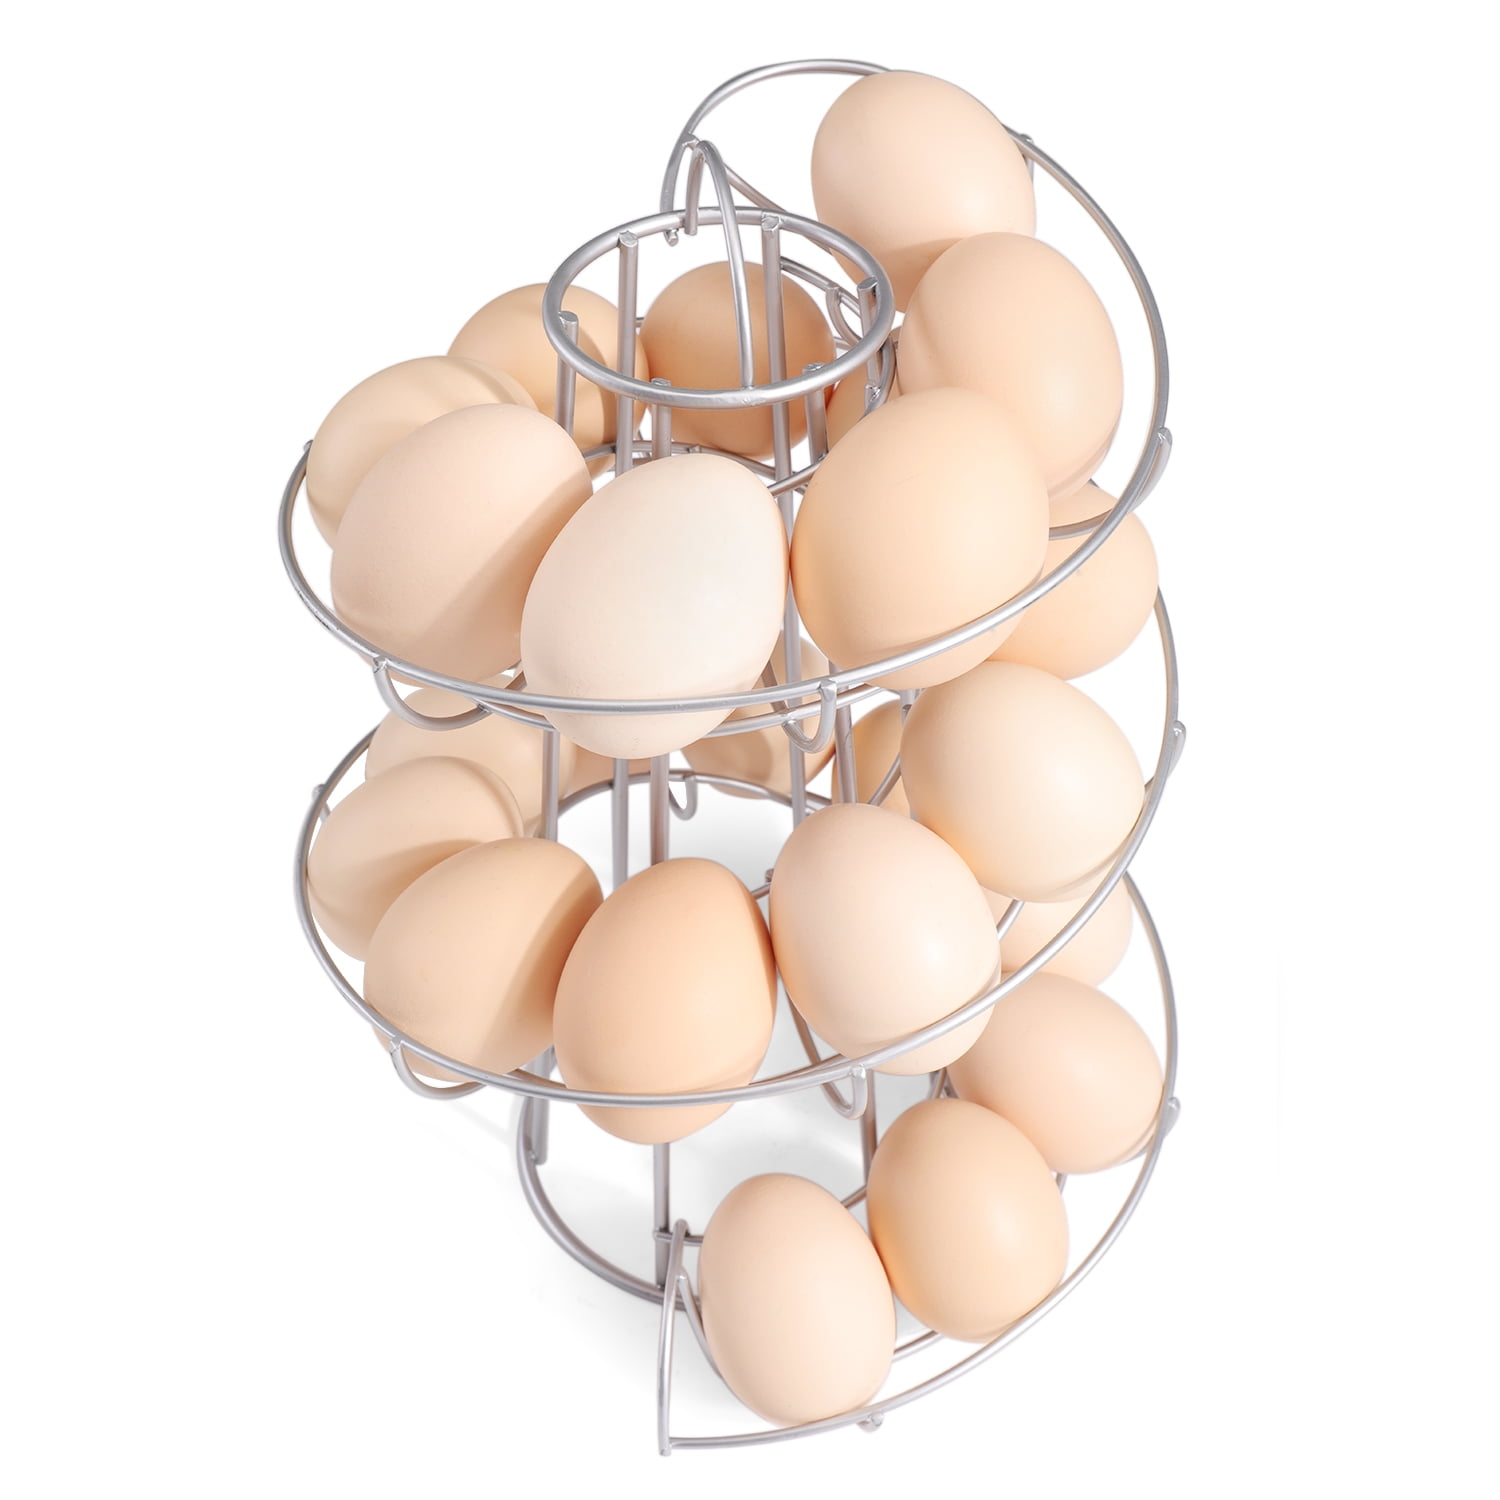  Fresh Egg Holder Countertop, Egg Skelter, Spiral Egg Holder  with Storage Basket, Chicken Egg Holder, Large Capacity Egg Storage for  Kitchen, Holds Up to 3 Dozen Eggs : Home & Kitchen